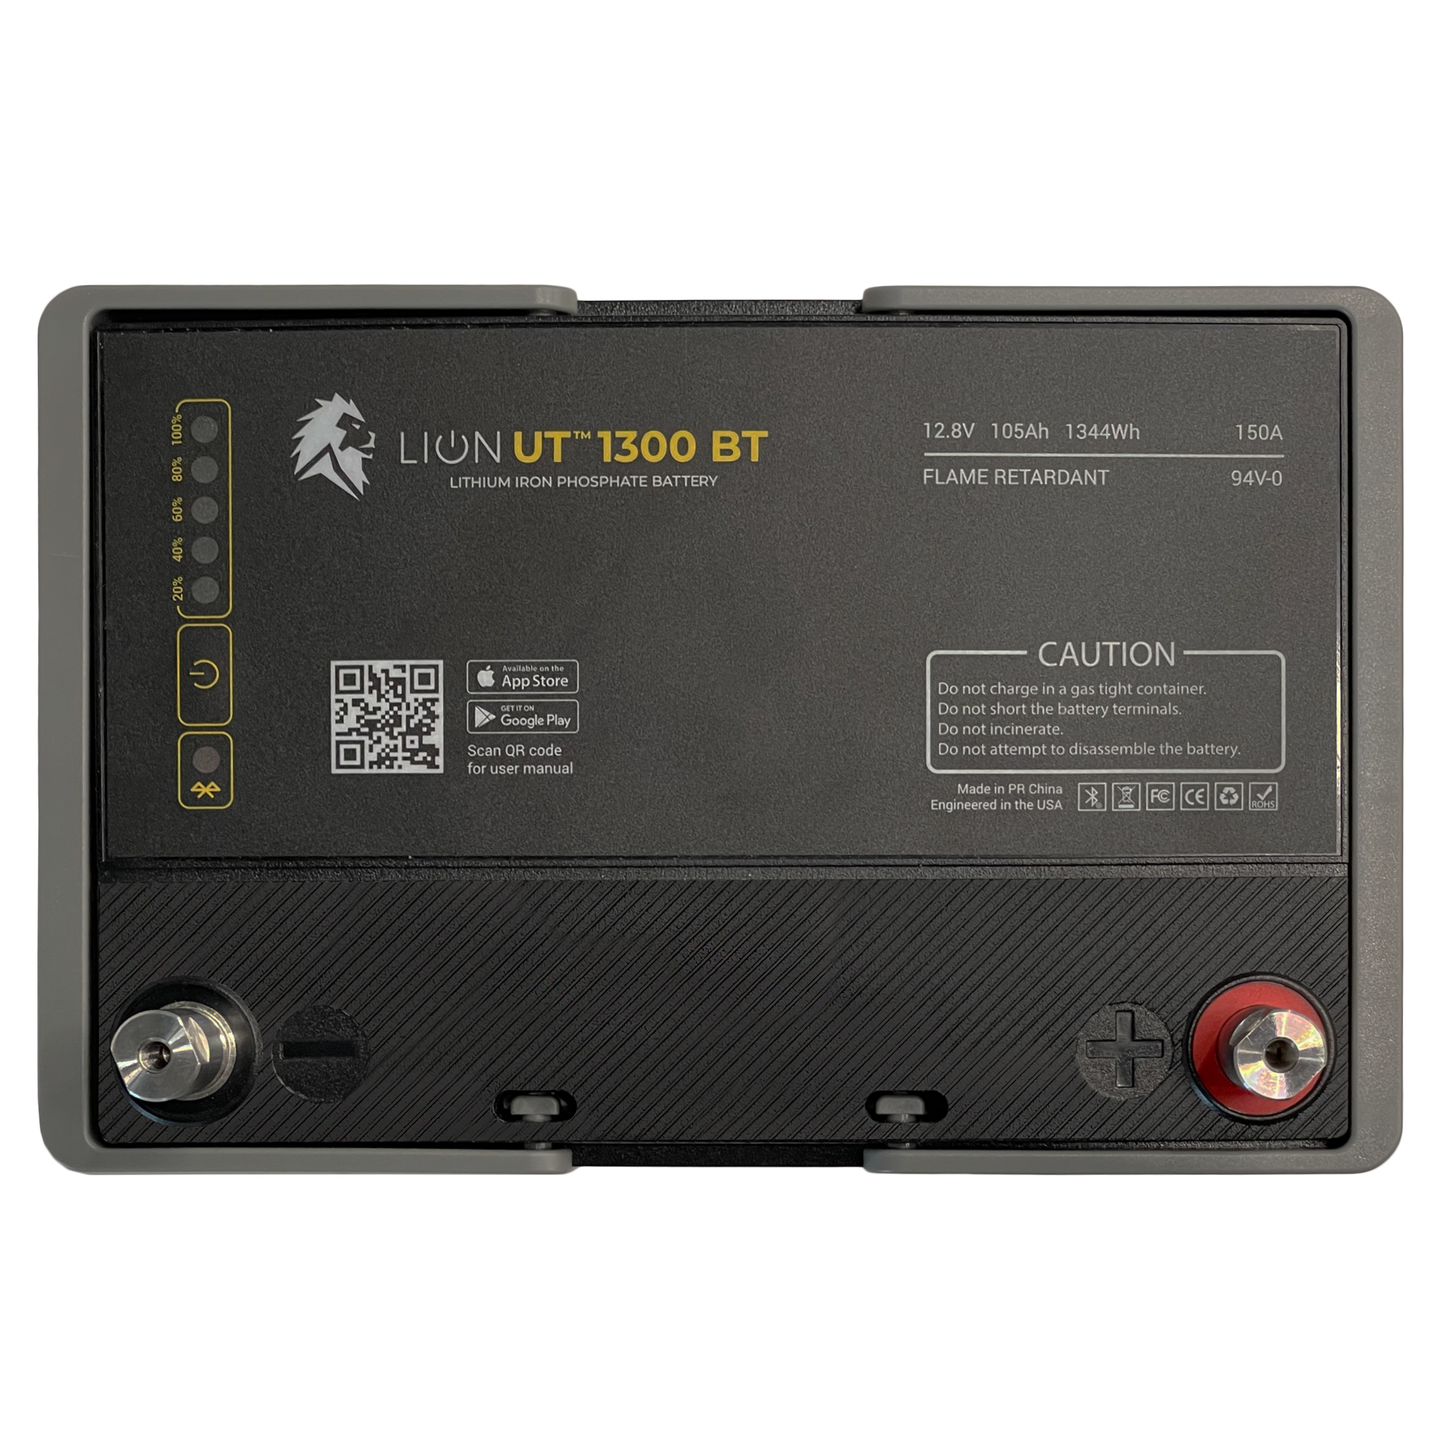 Lion UTTM 1300 BT 12V Battery, 105Ah (1344Wh) LiFePO4, 12.8V Nominal, Bluetooth